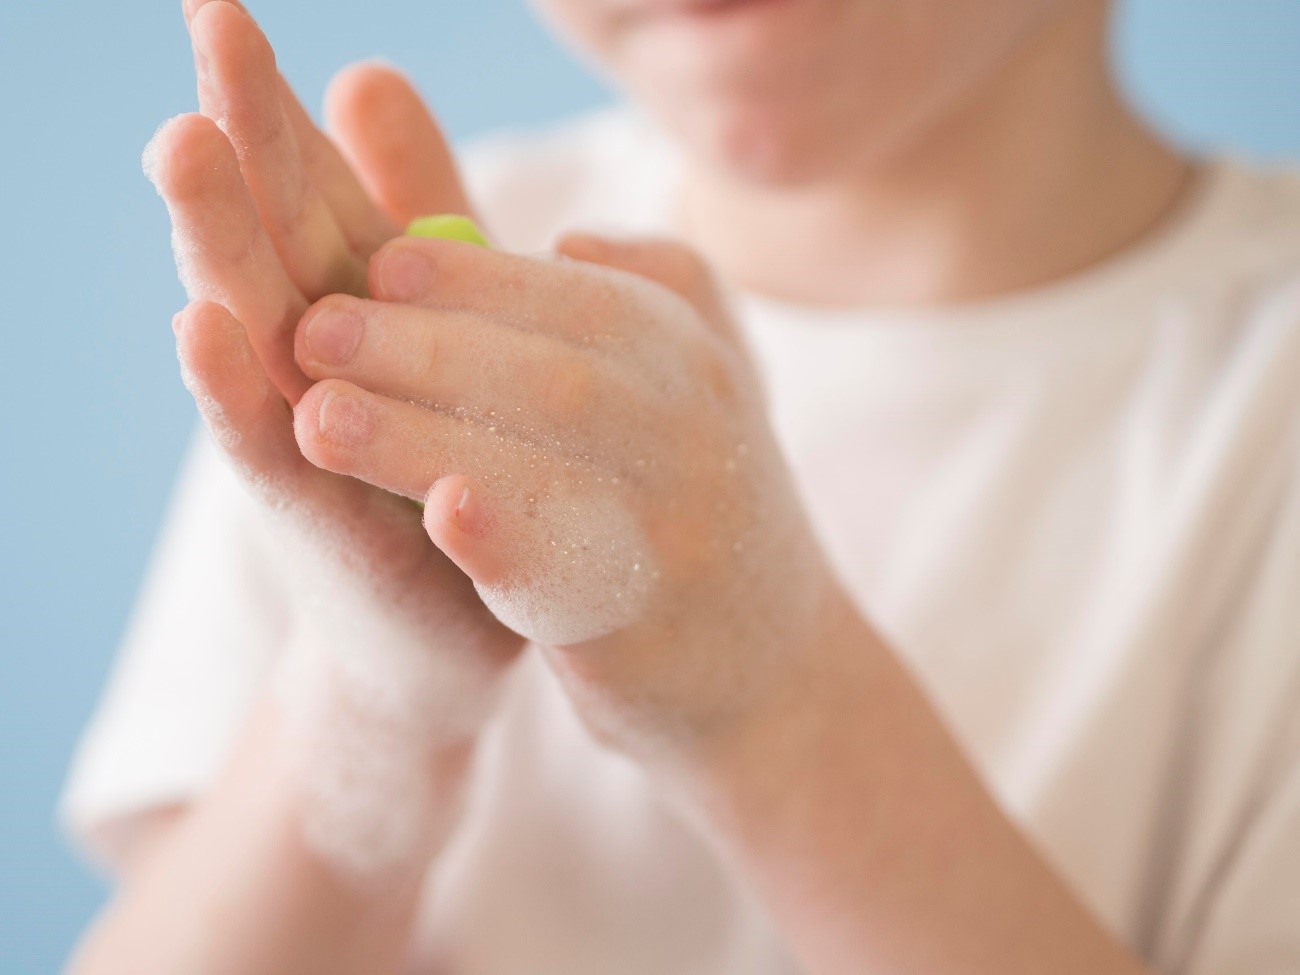 Les mans netes eviten malalties i salven vides!